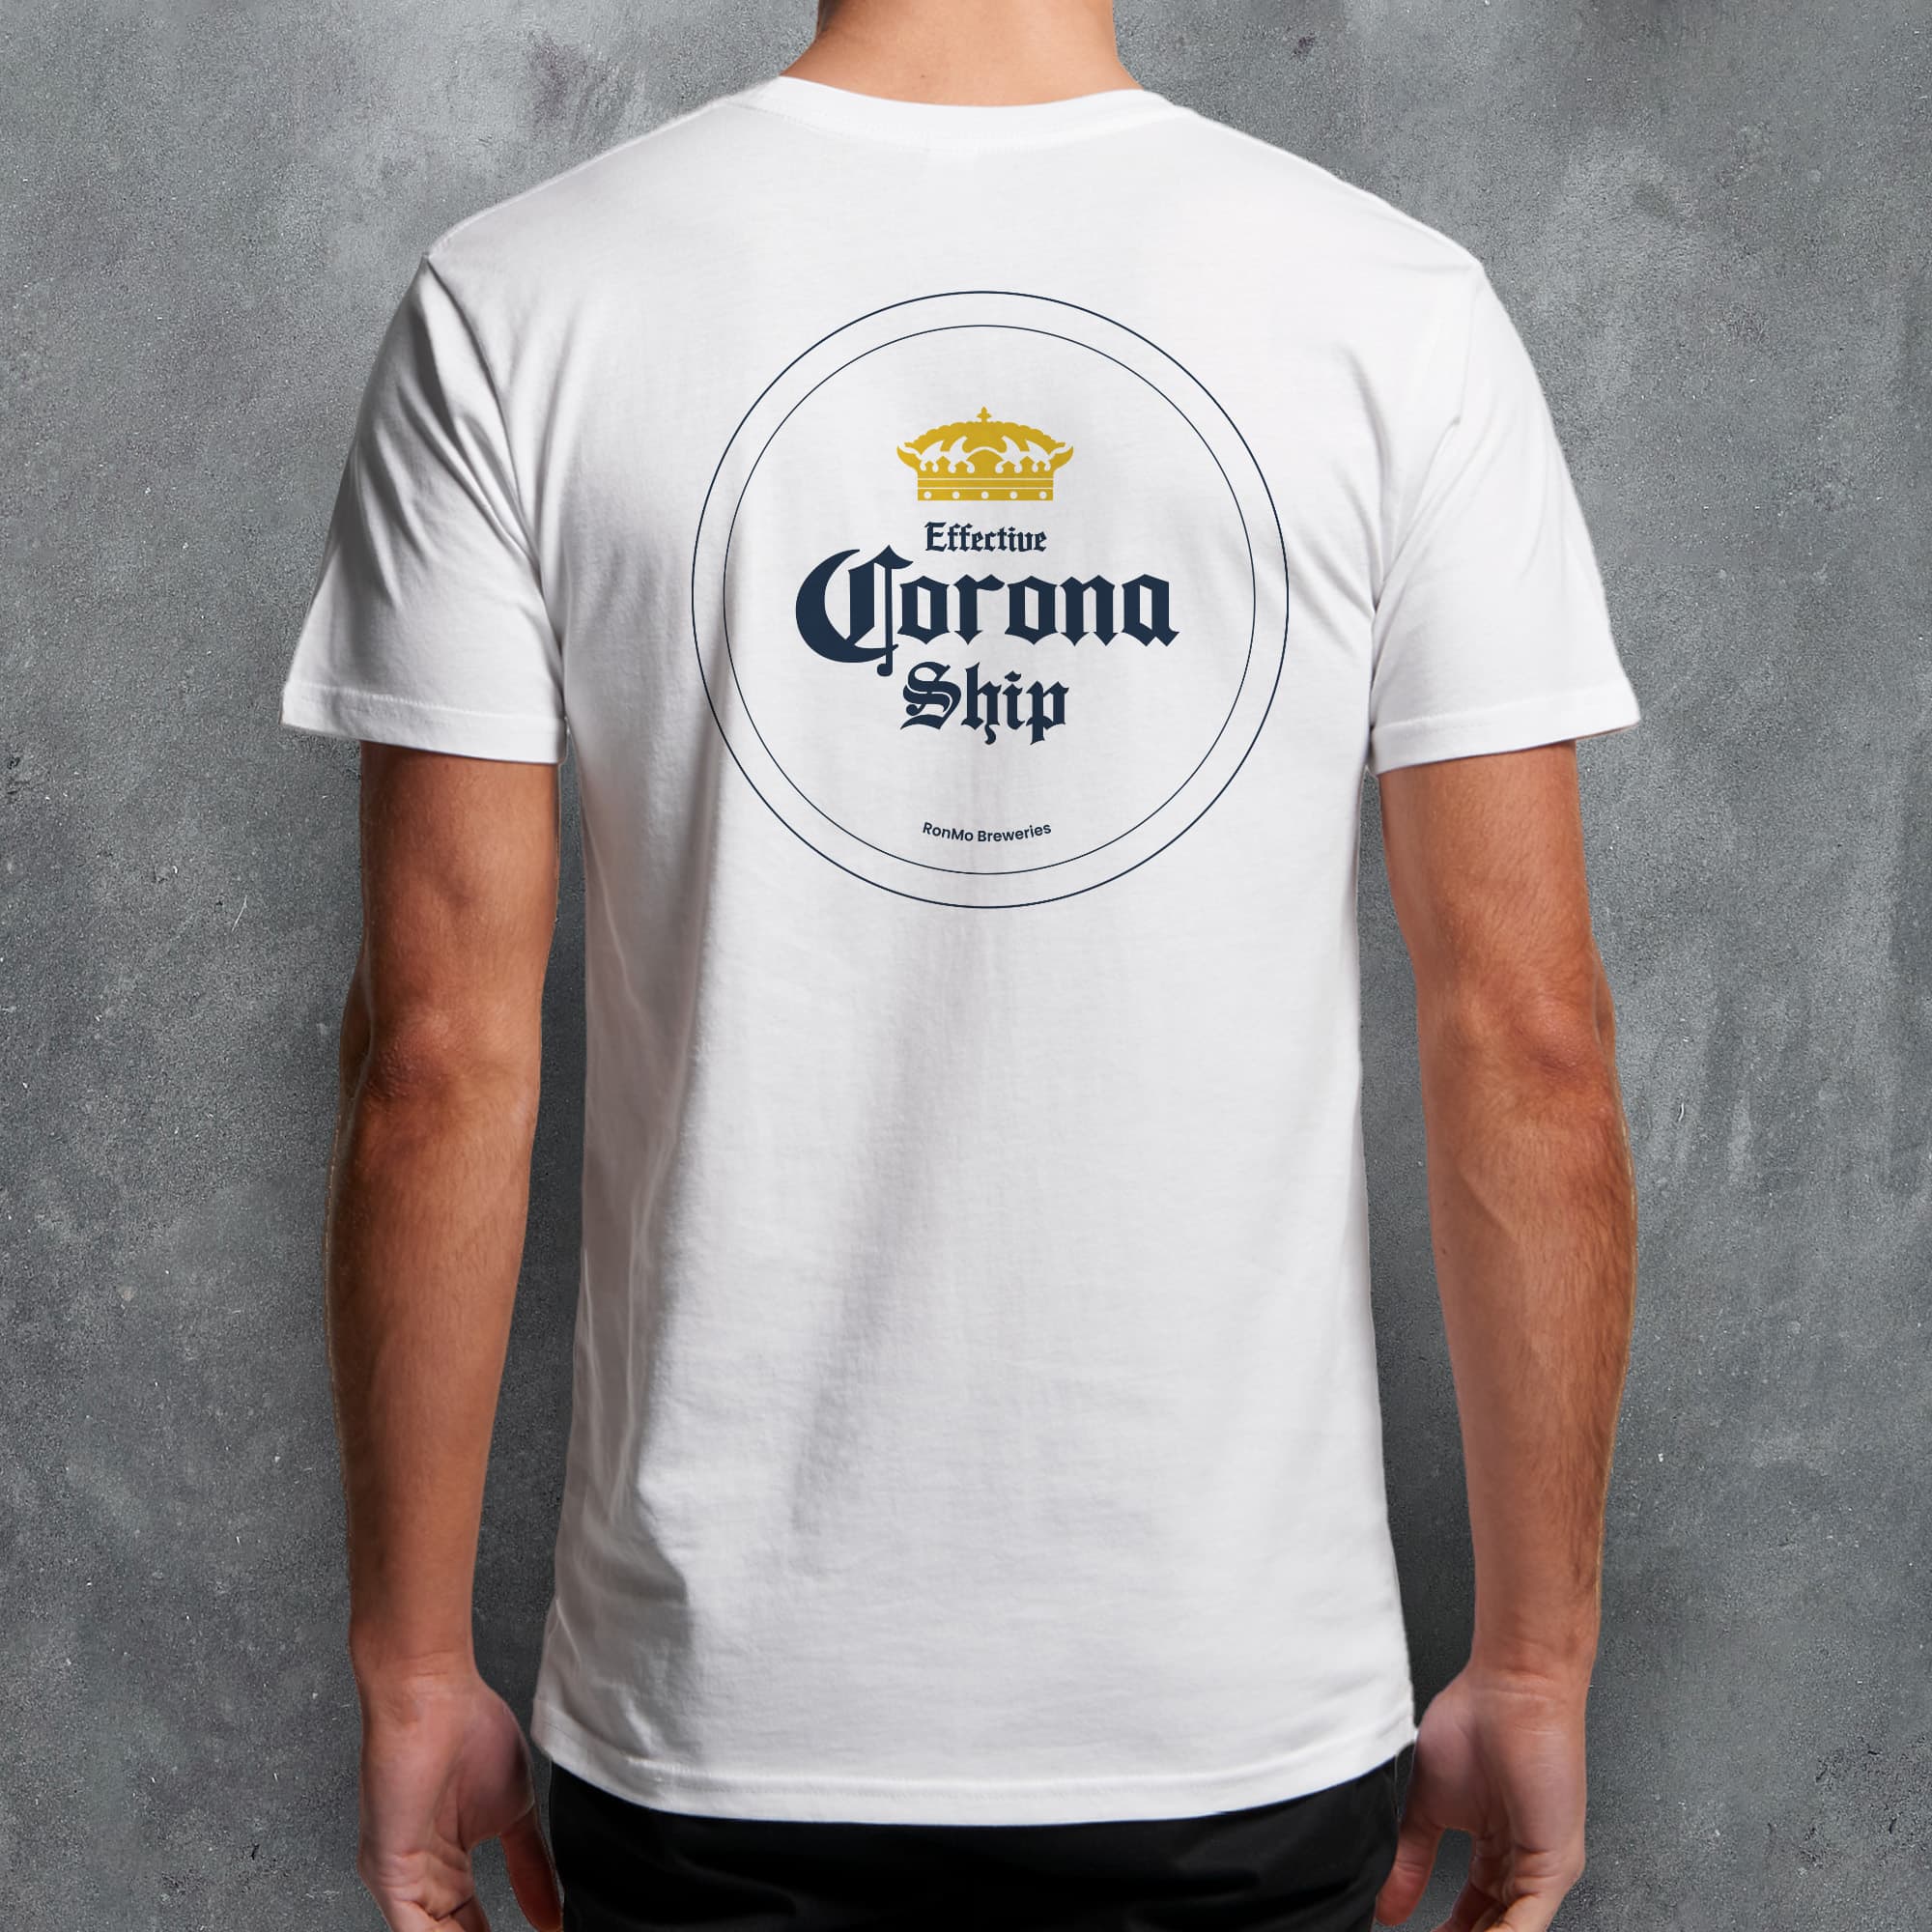 Fantasy League Football FPL 'Off The Bar' Effective Coronaship T-Shirt